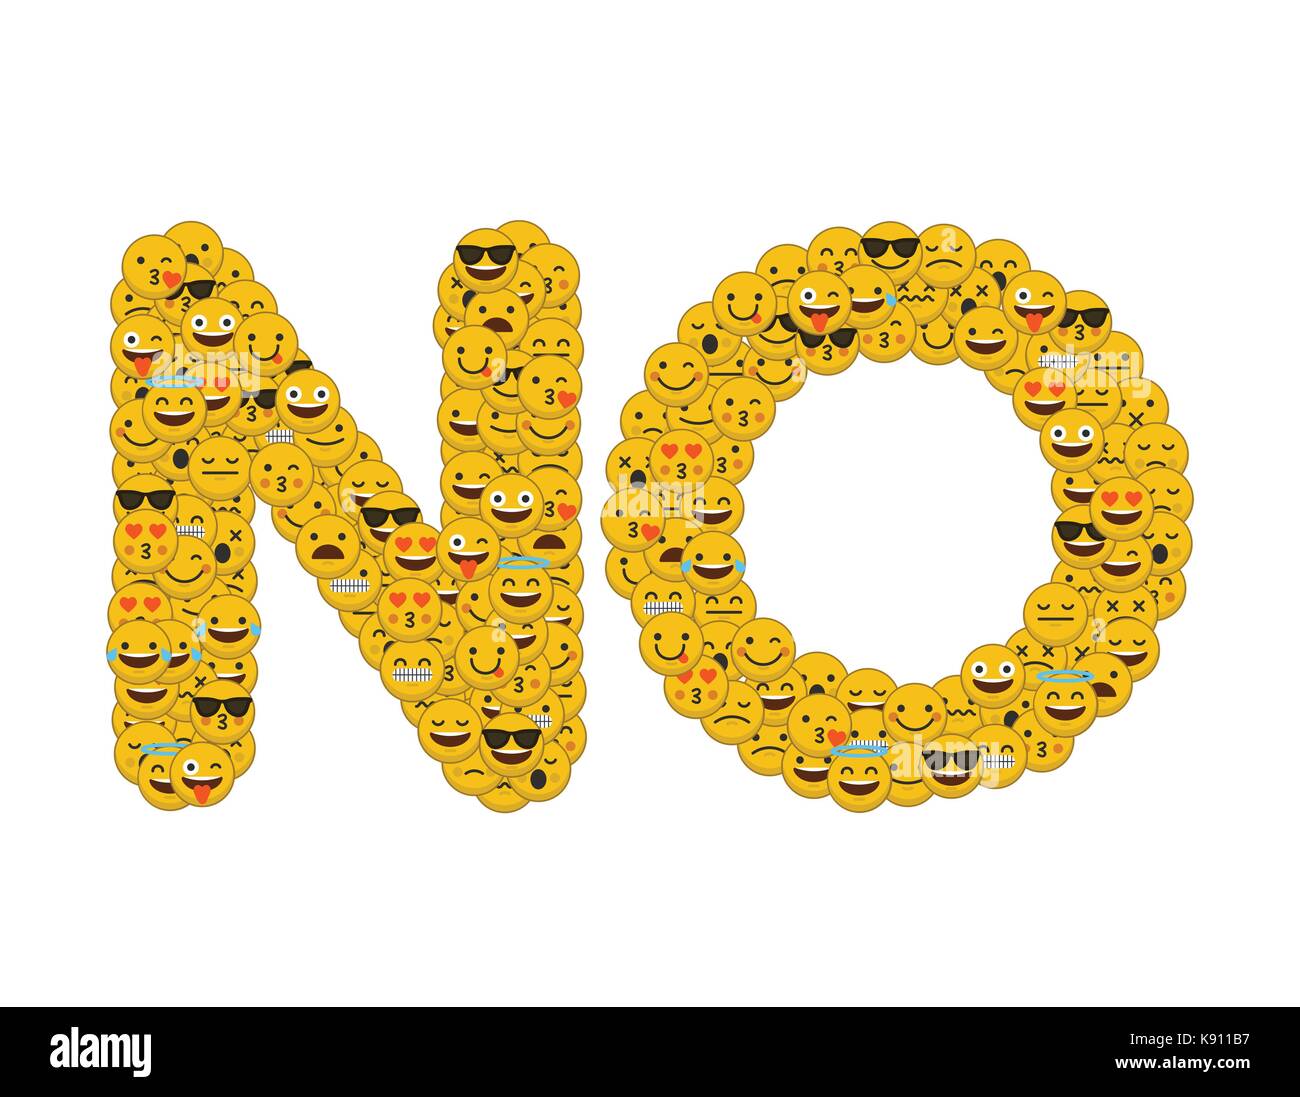 the-word-no-written-in-social-media-emoji-smiley-characters-K911B7.jpg